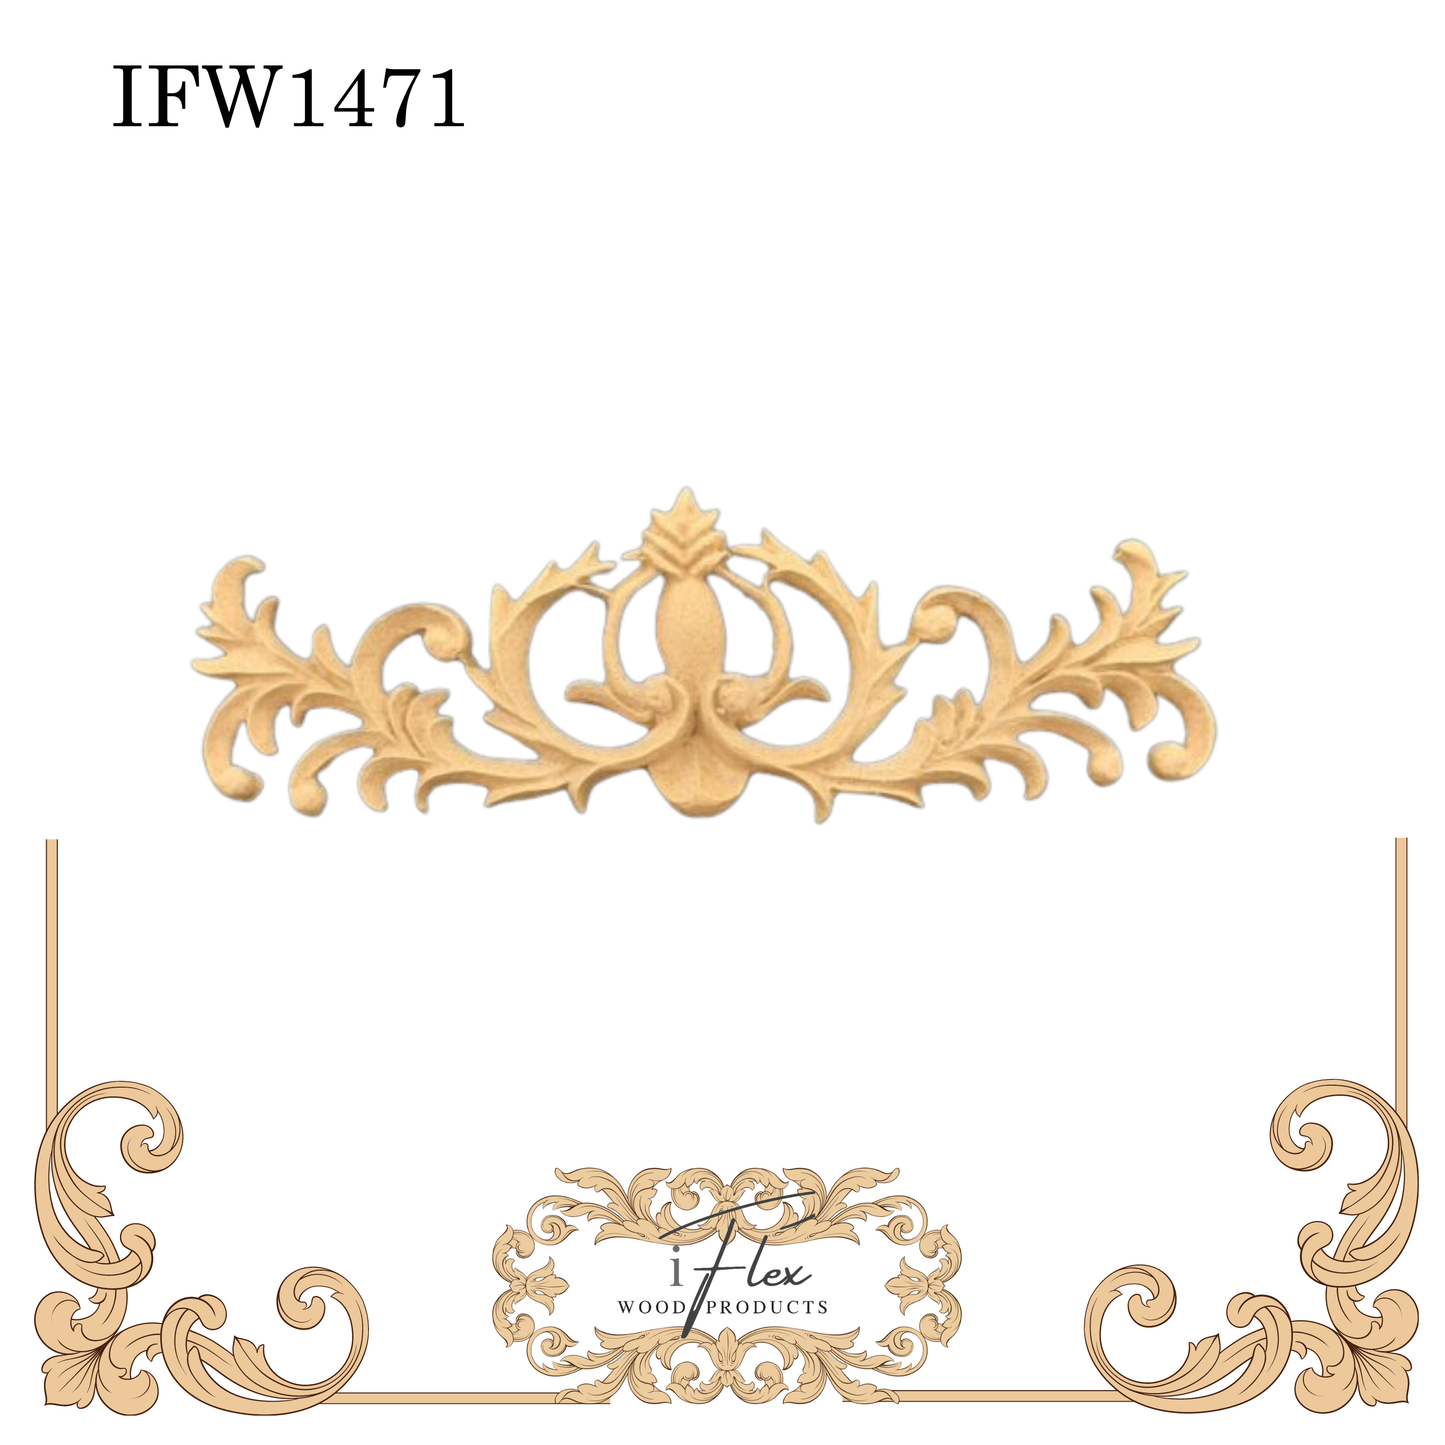 IFW 1471 Decorative Center, flexible moulding.